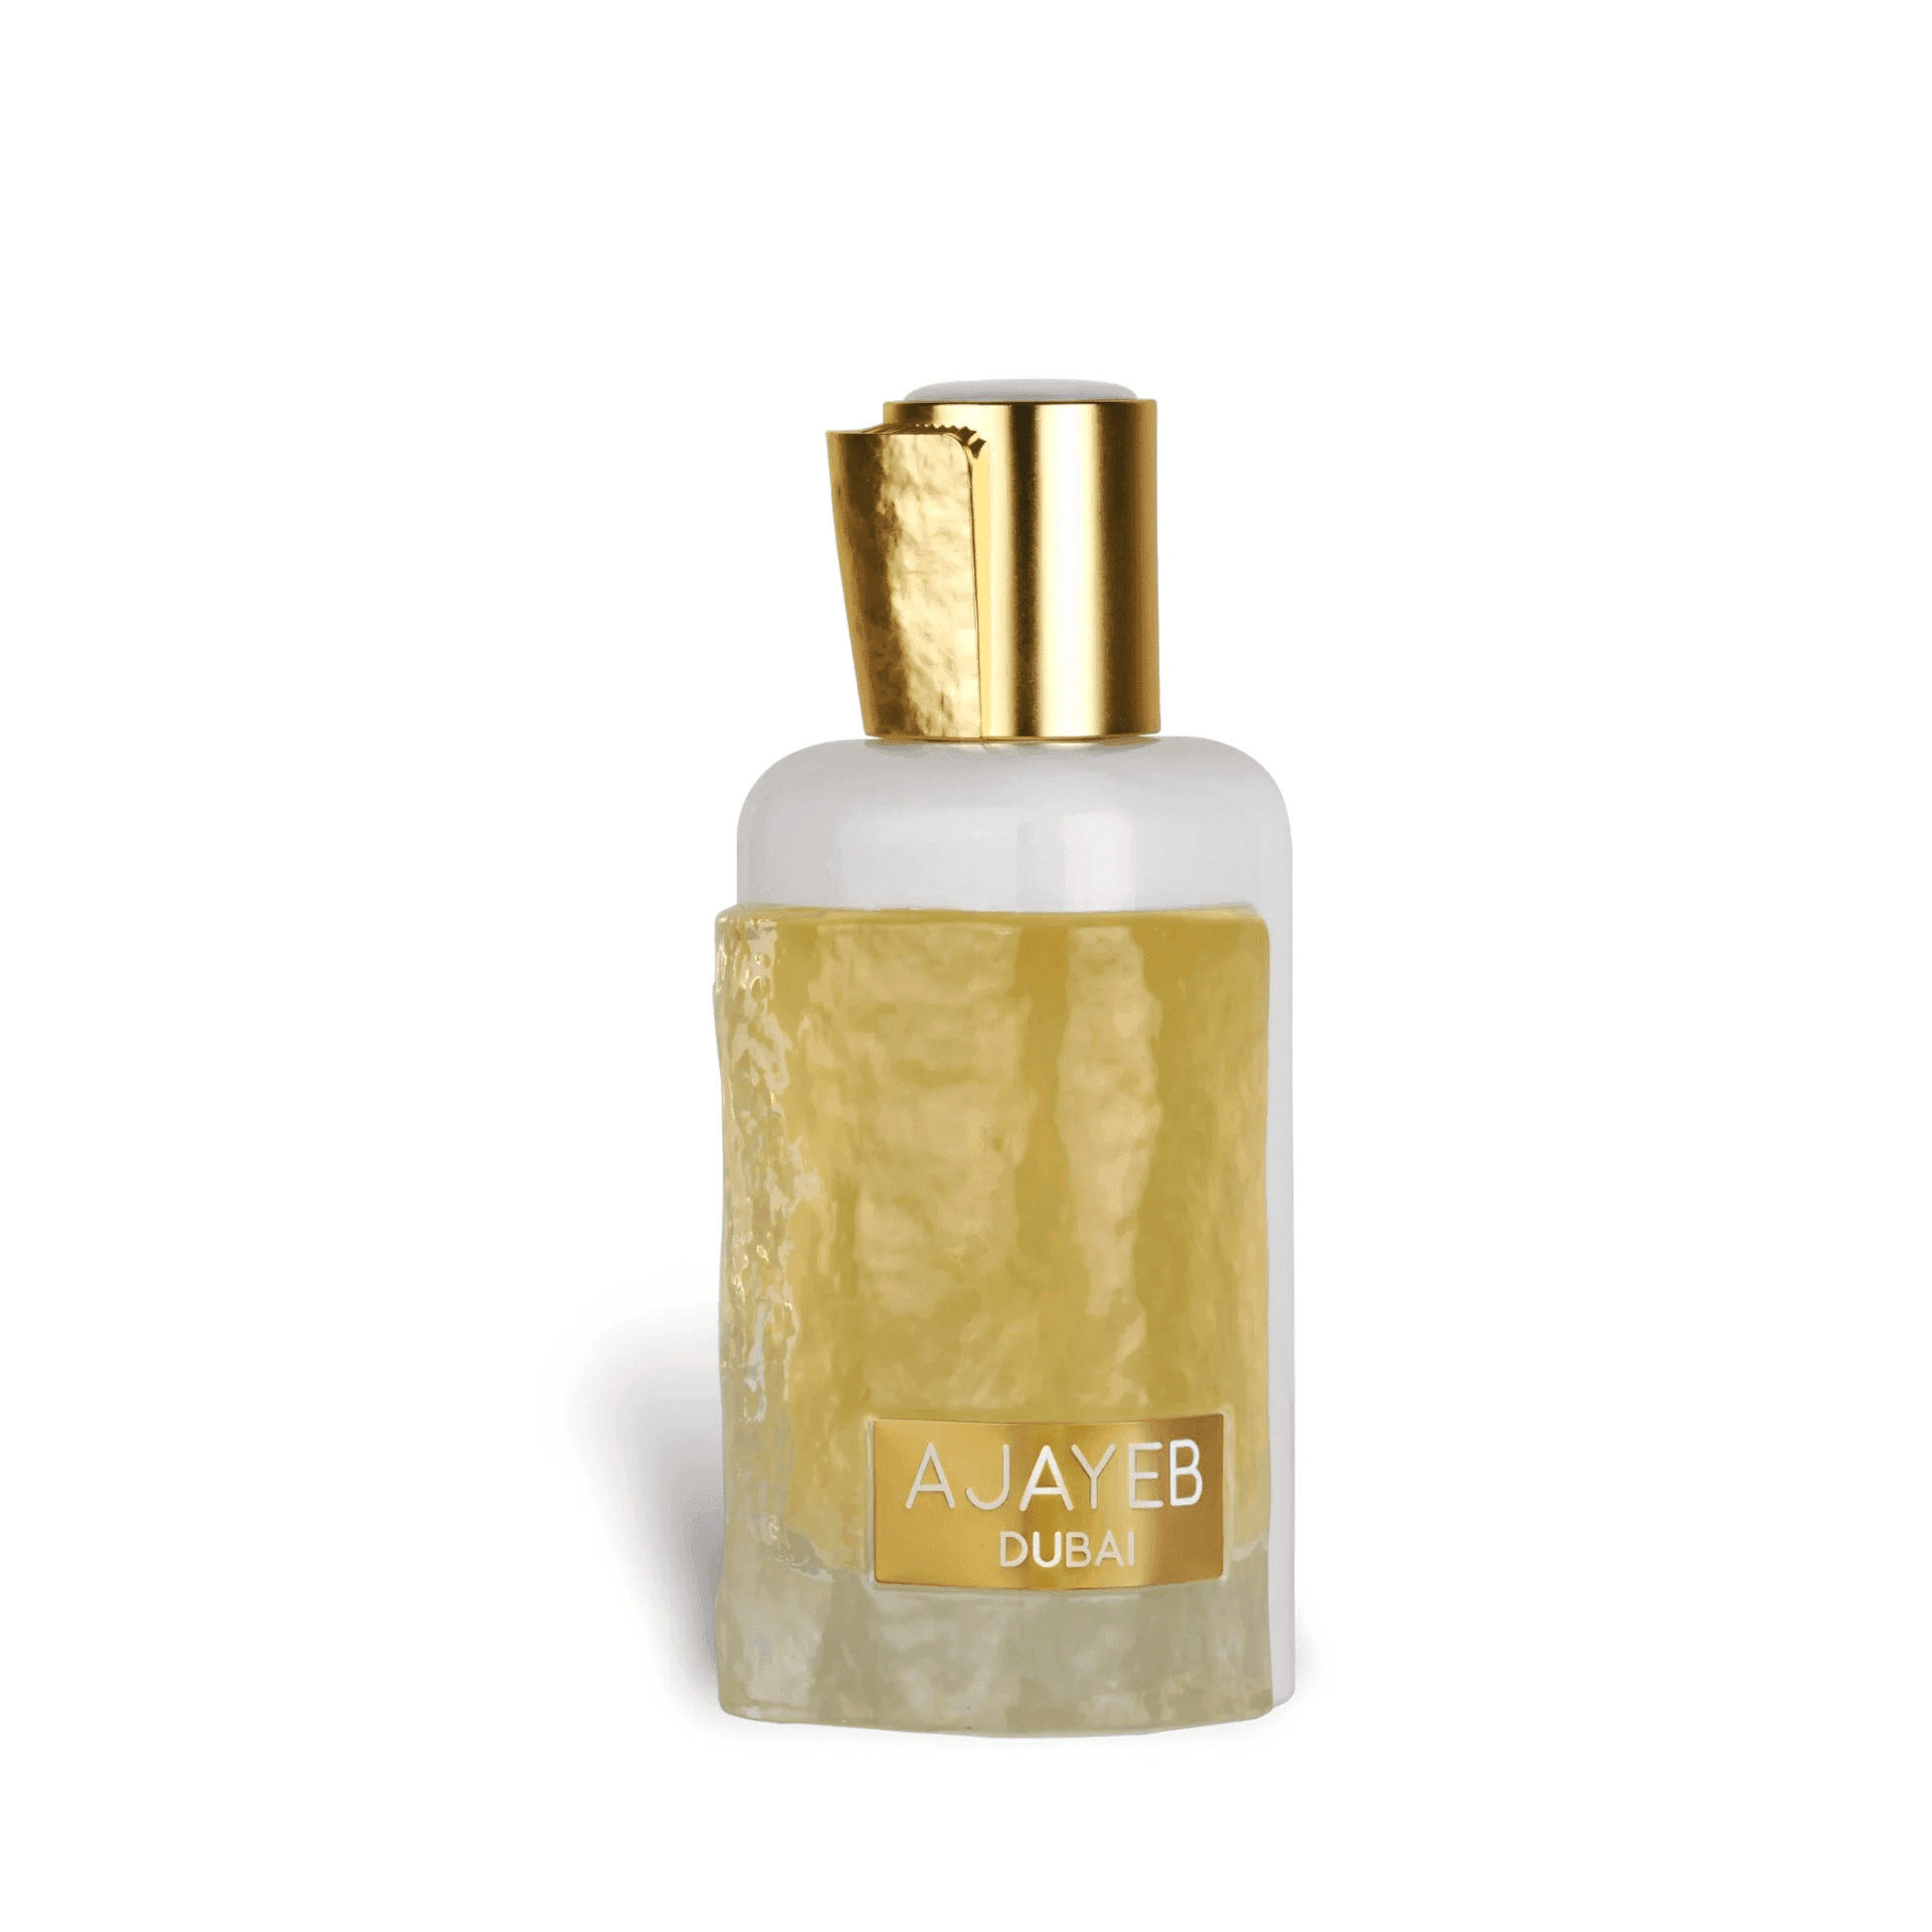 Close up image of the Ajayeb Dubai Portrait Perfume bottle showcasing sophistication through its design.